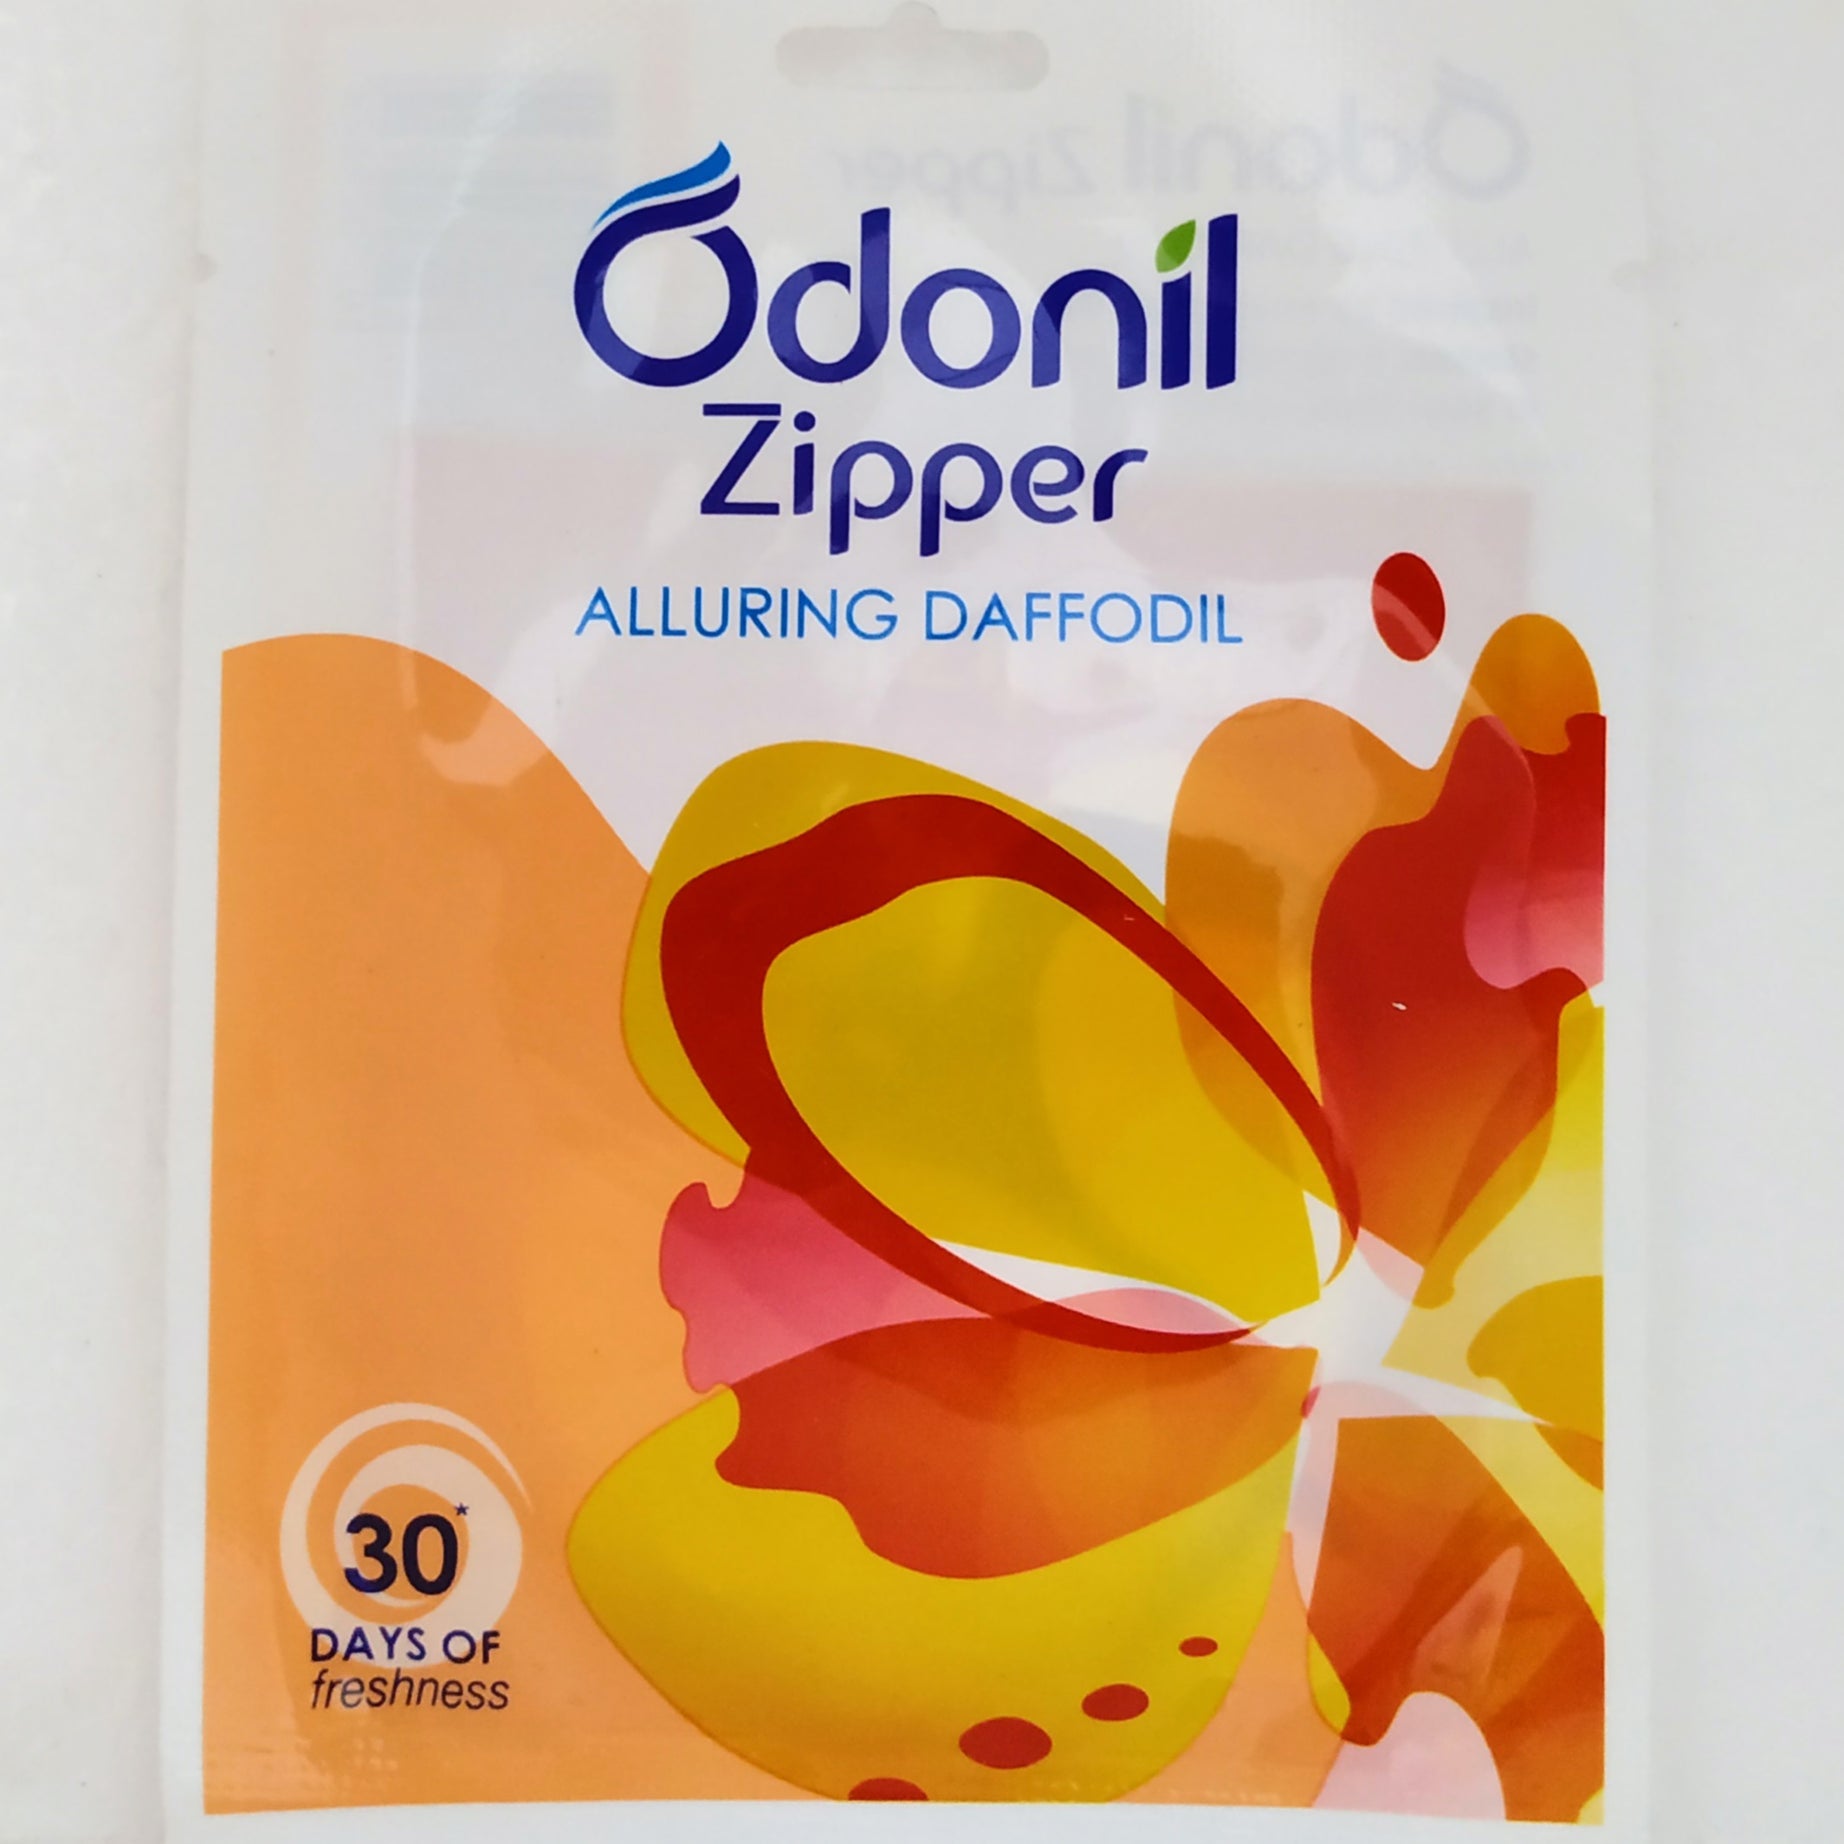 Shop Odonil zipper - Alluring daffodil at price 55.00 from Dabur Online - Ayush Care